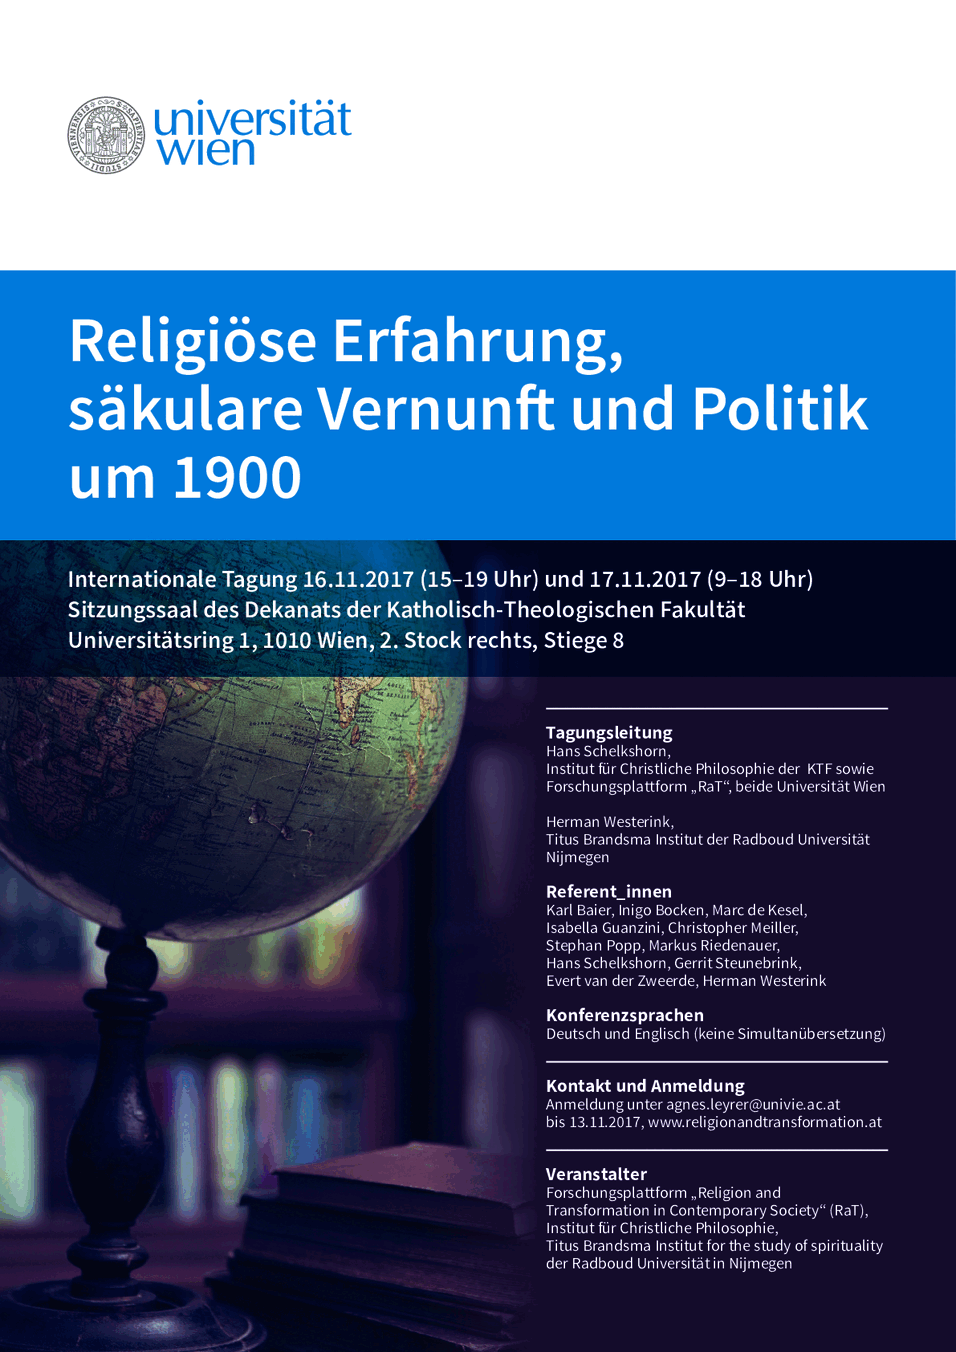 Plakat zur Tagung Religiöse Erfahrung, säkulare Vernunft und Politik um 1900